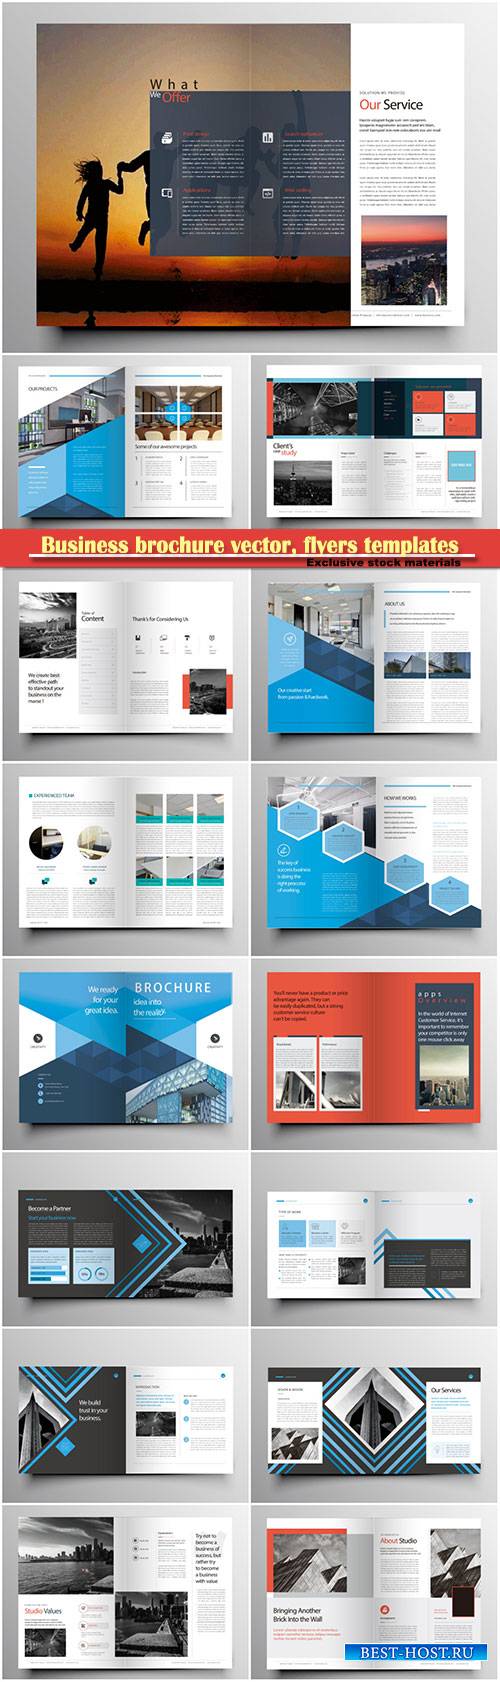 Business brochure vector, flyers templates, report cover design # 83